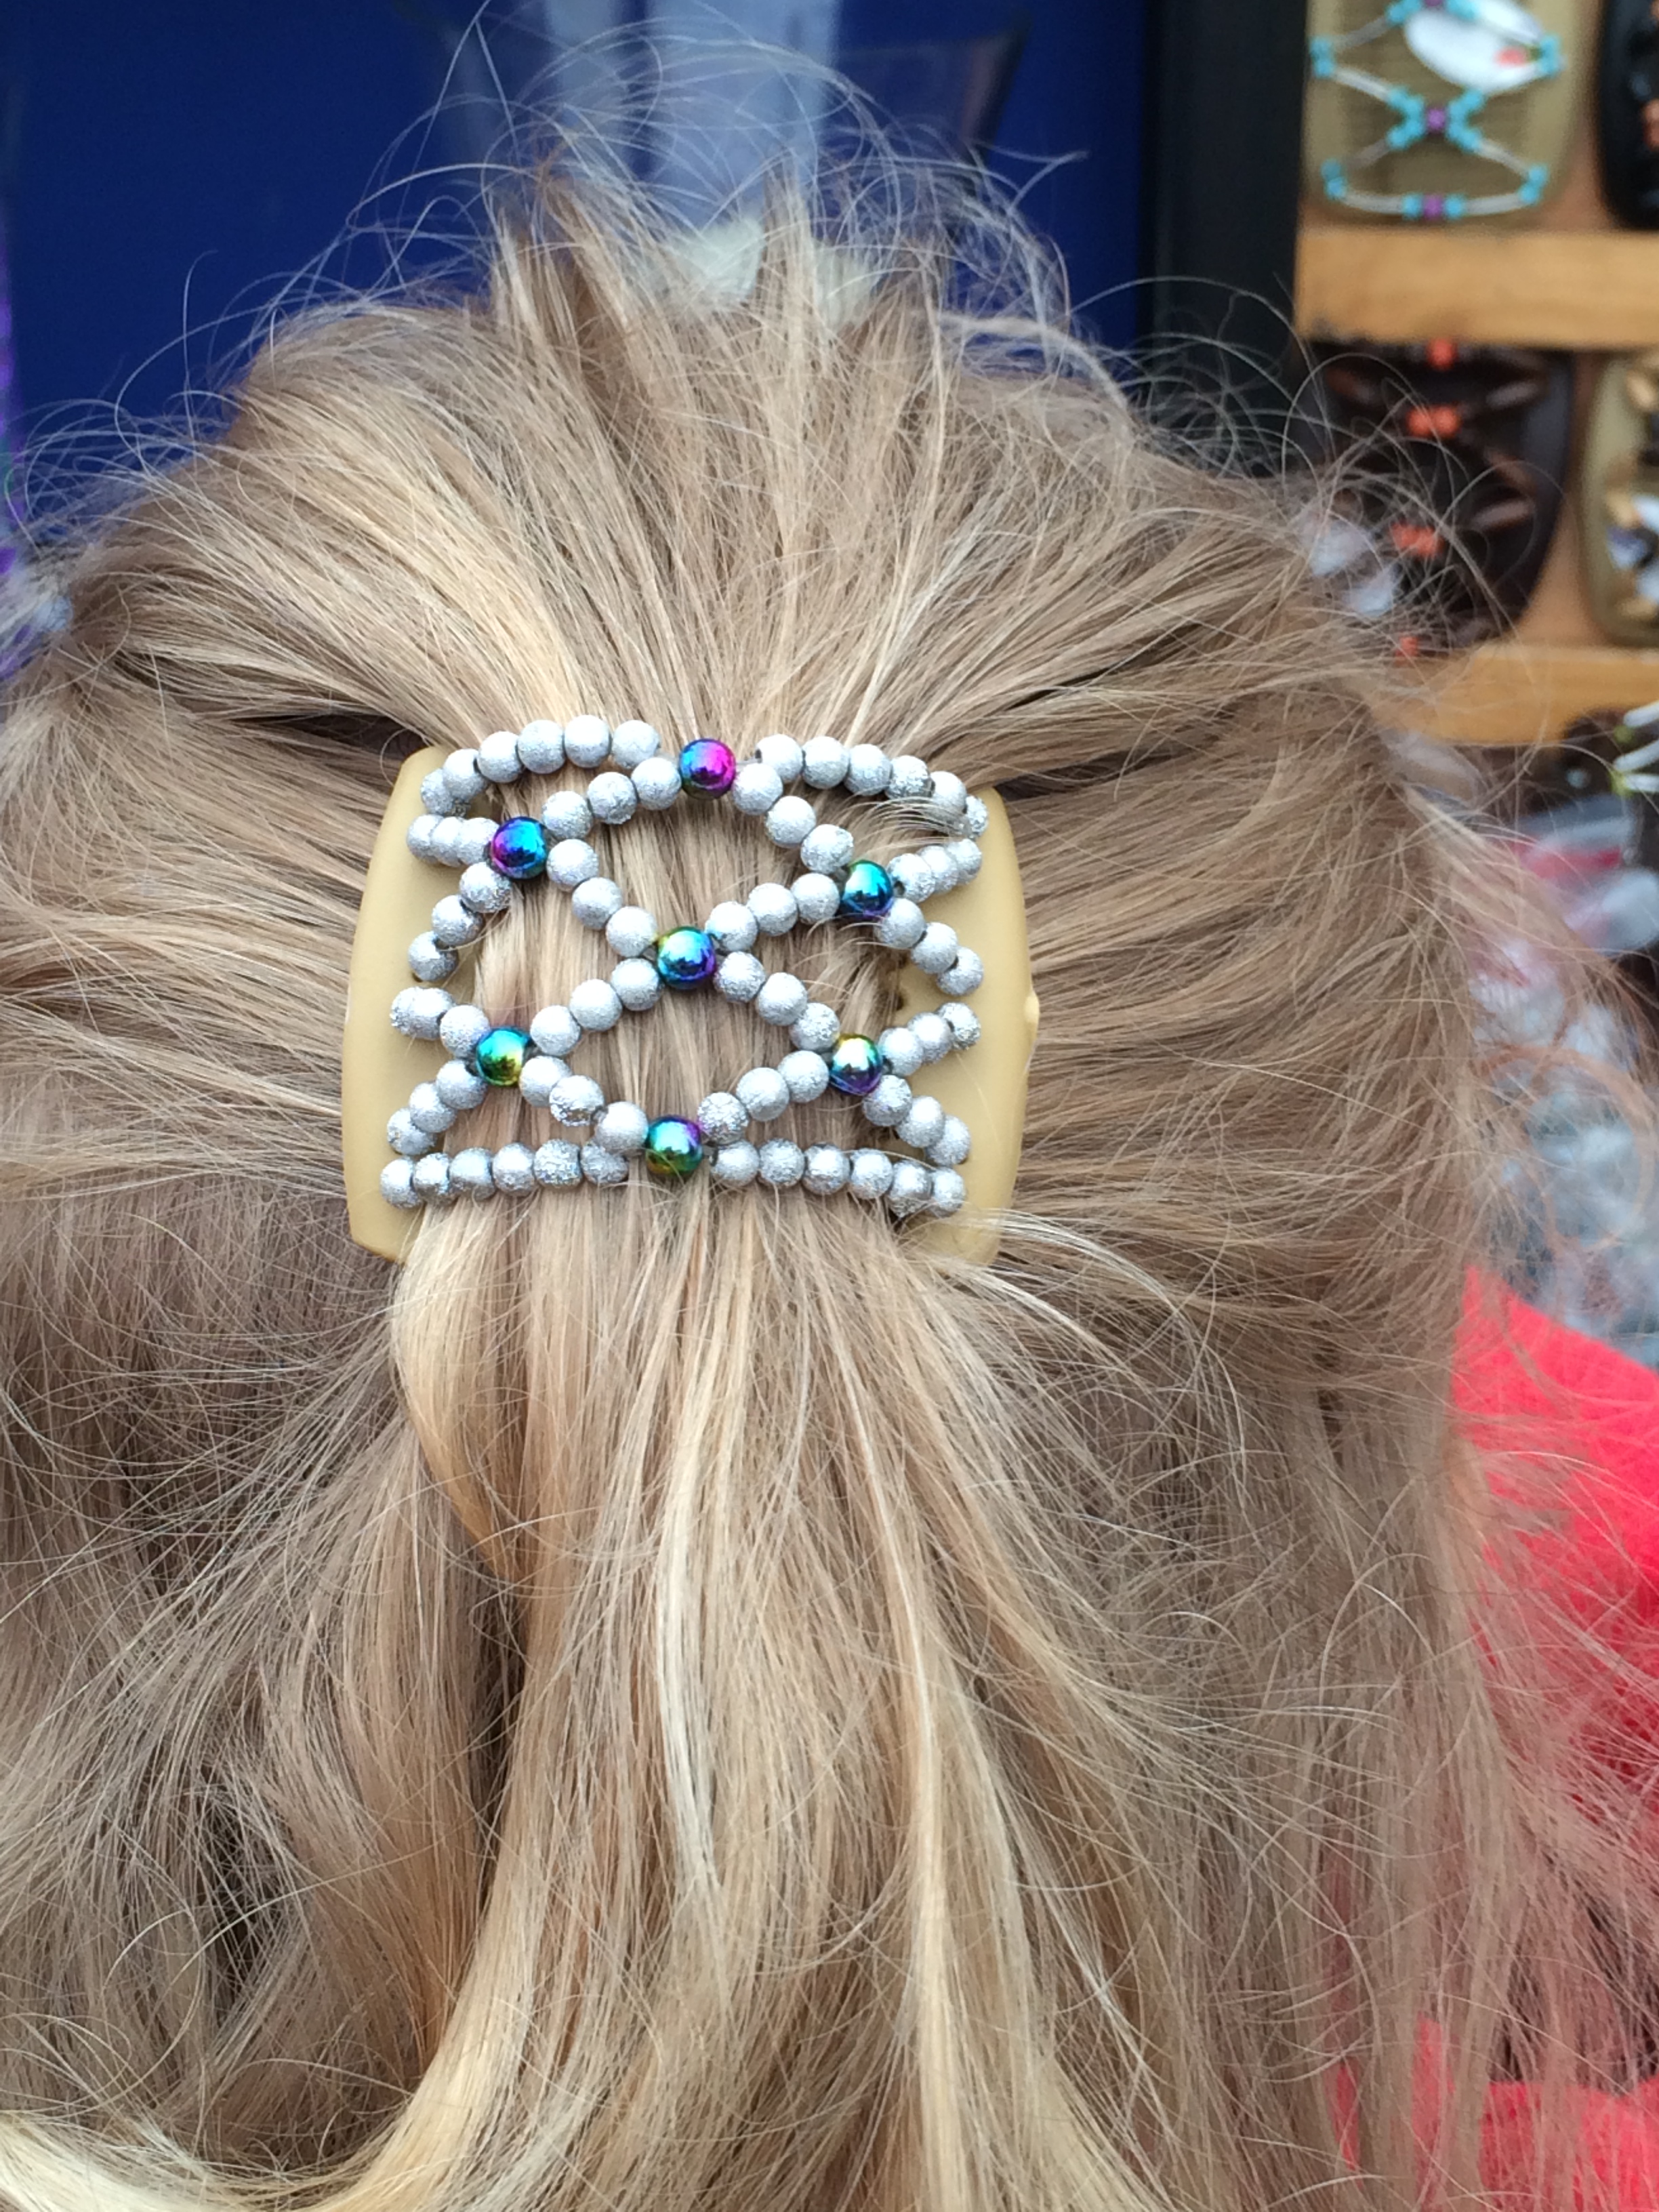 Ladybug hair clip in little girls hair - half up